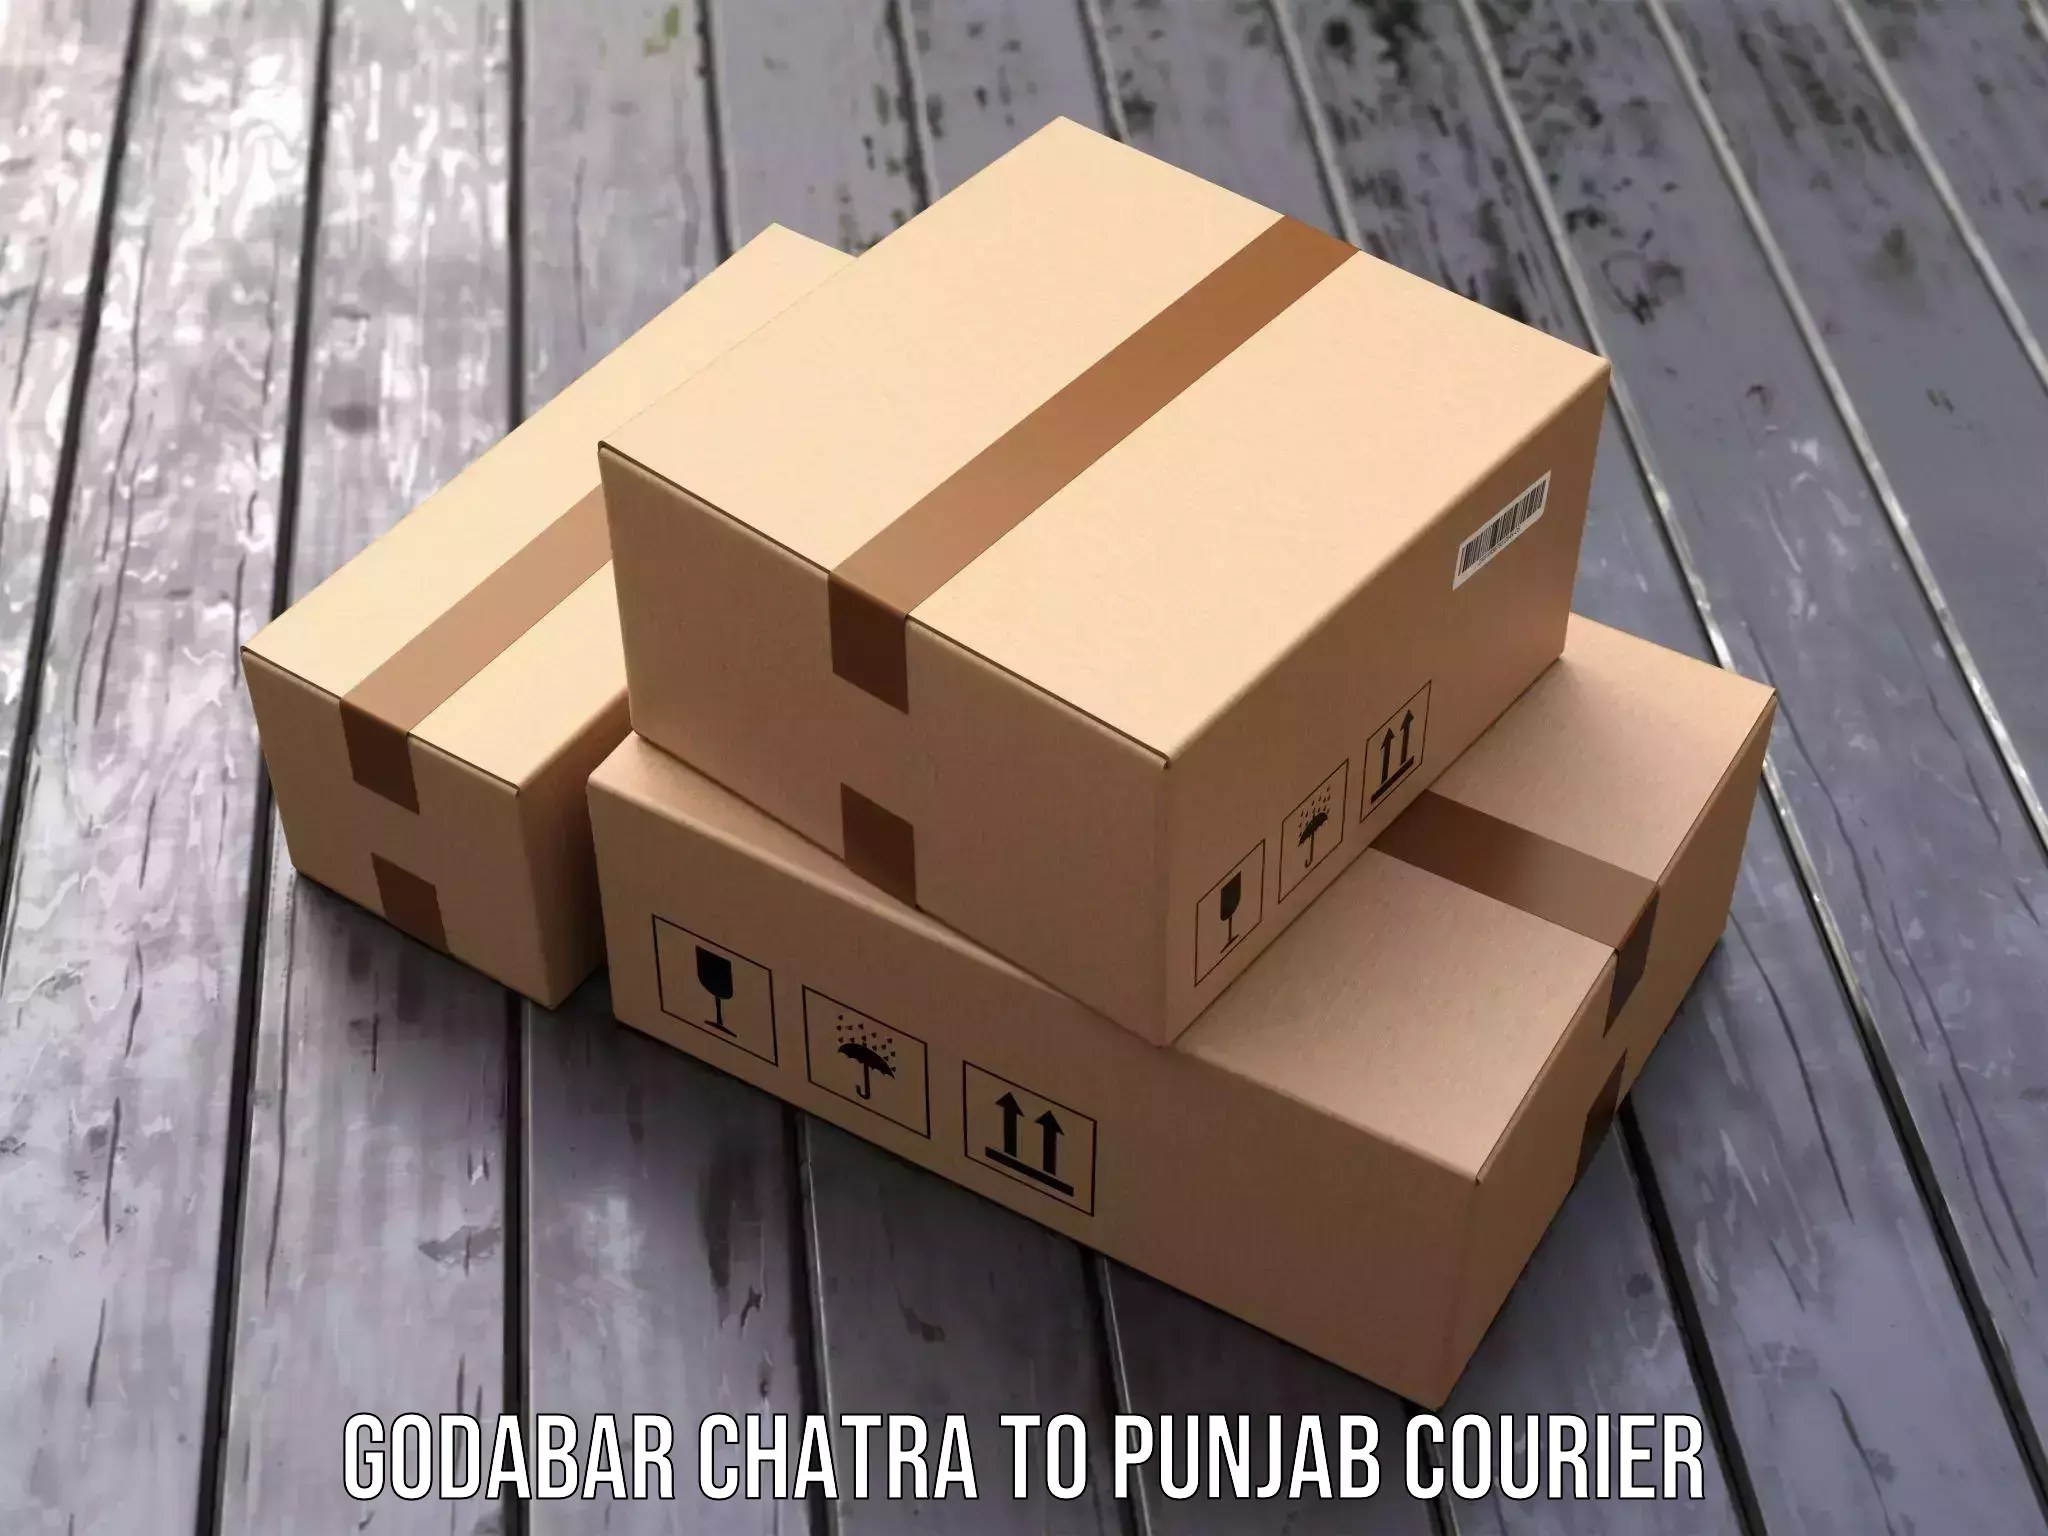 Courier service innovation Godabar Chatra to Gurdaspur